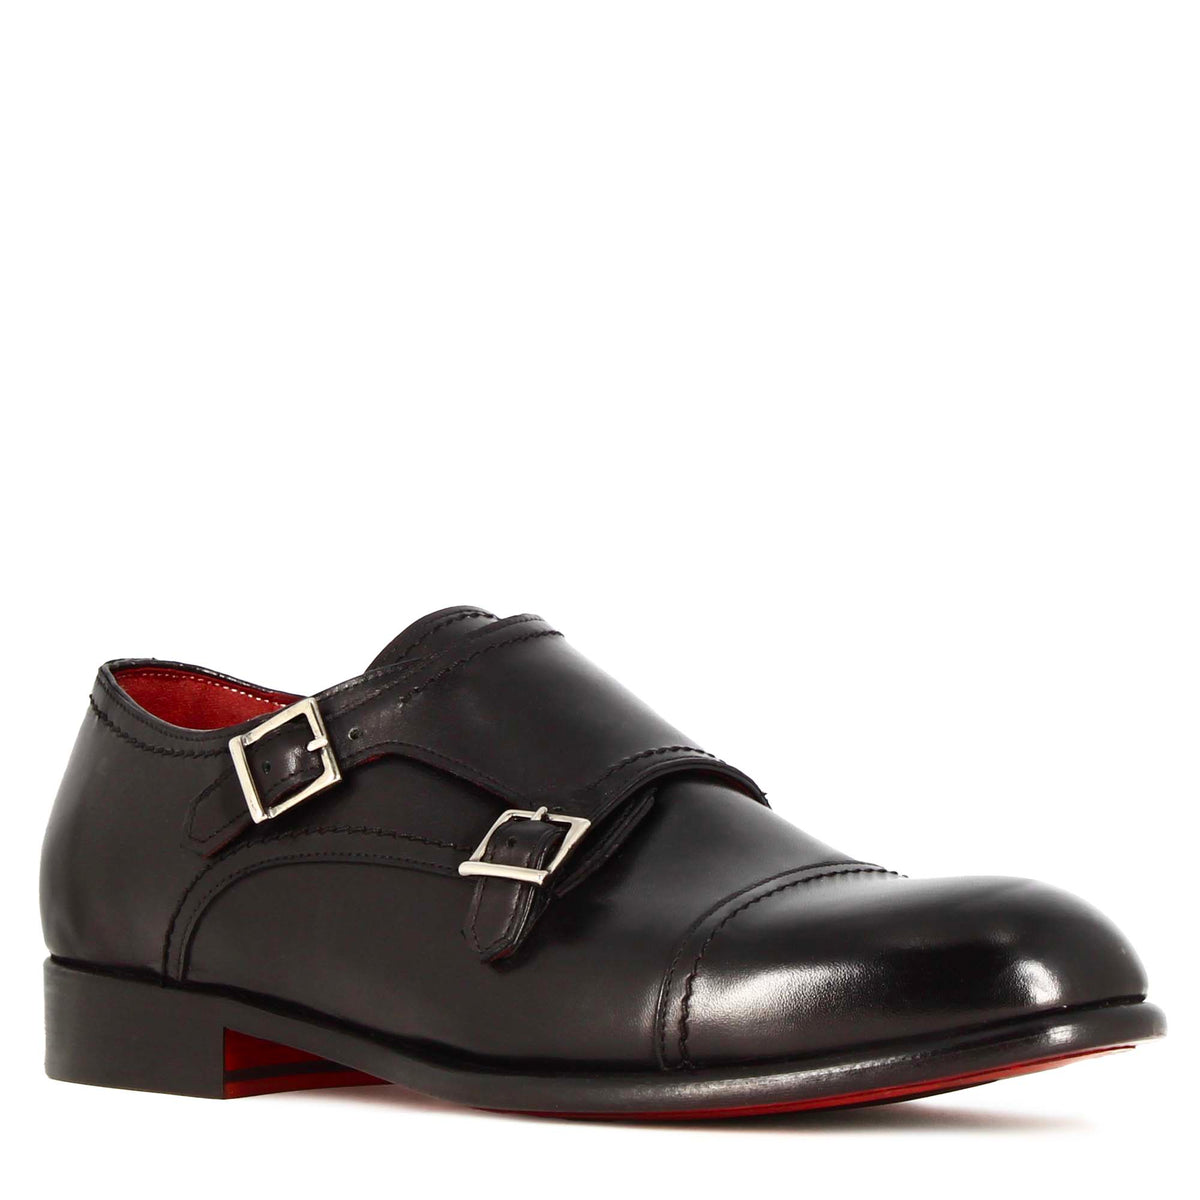 Men's double buckle shoe in black leather